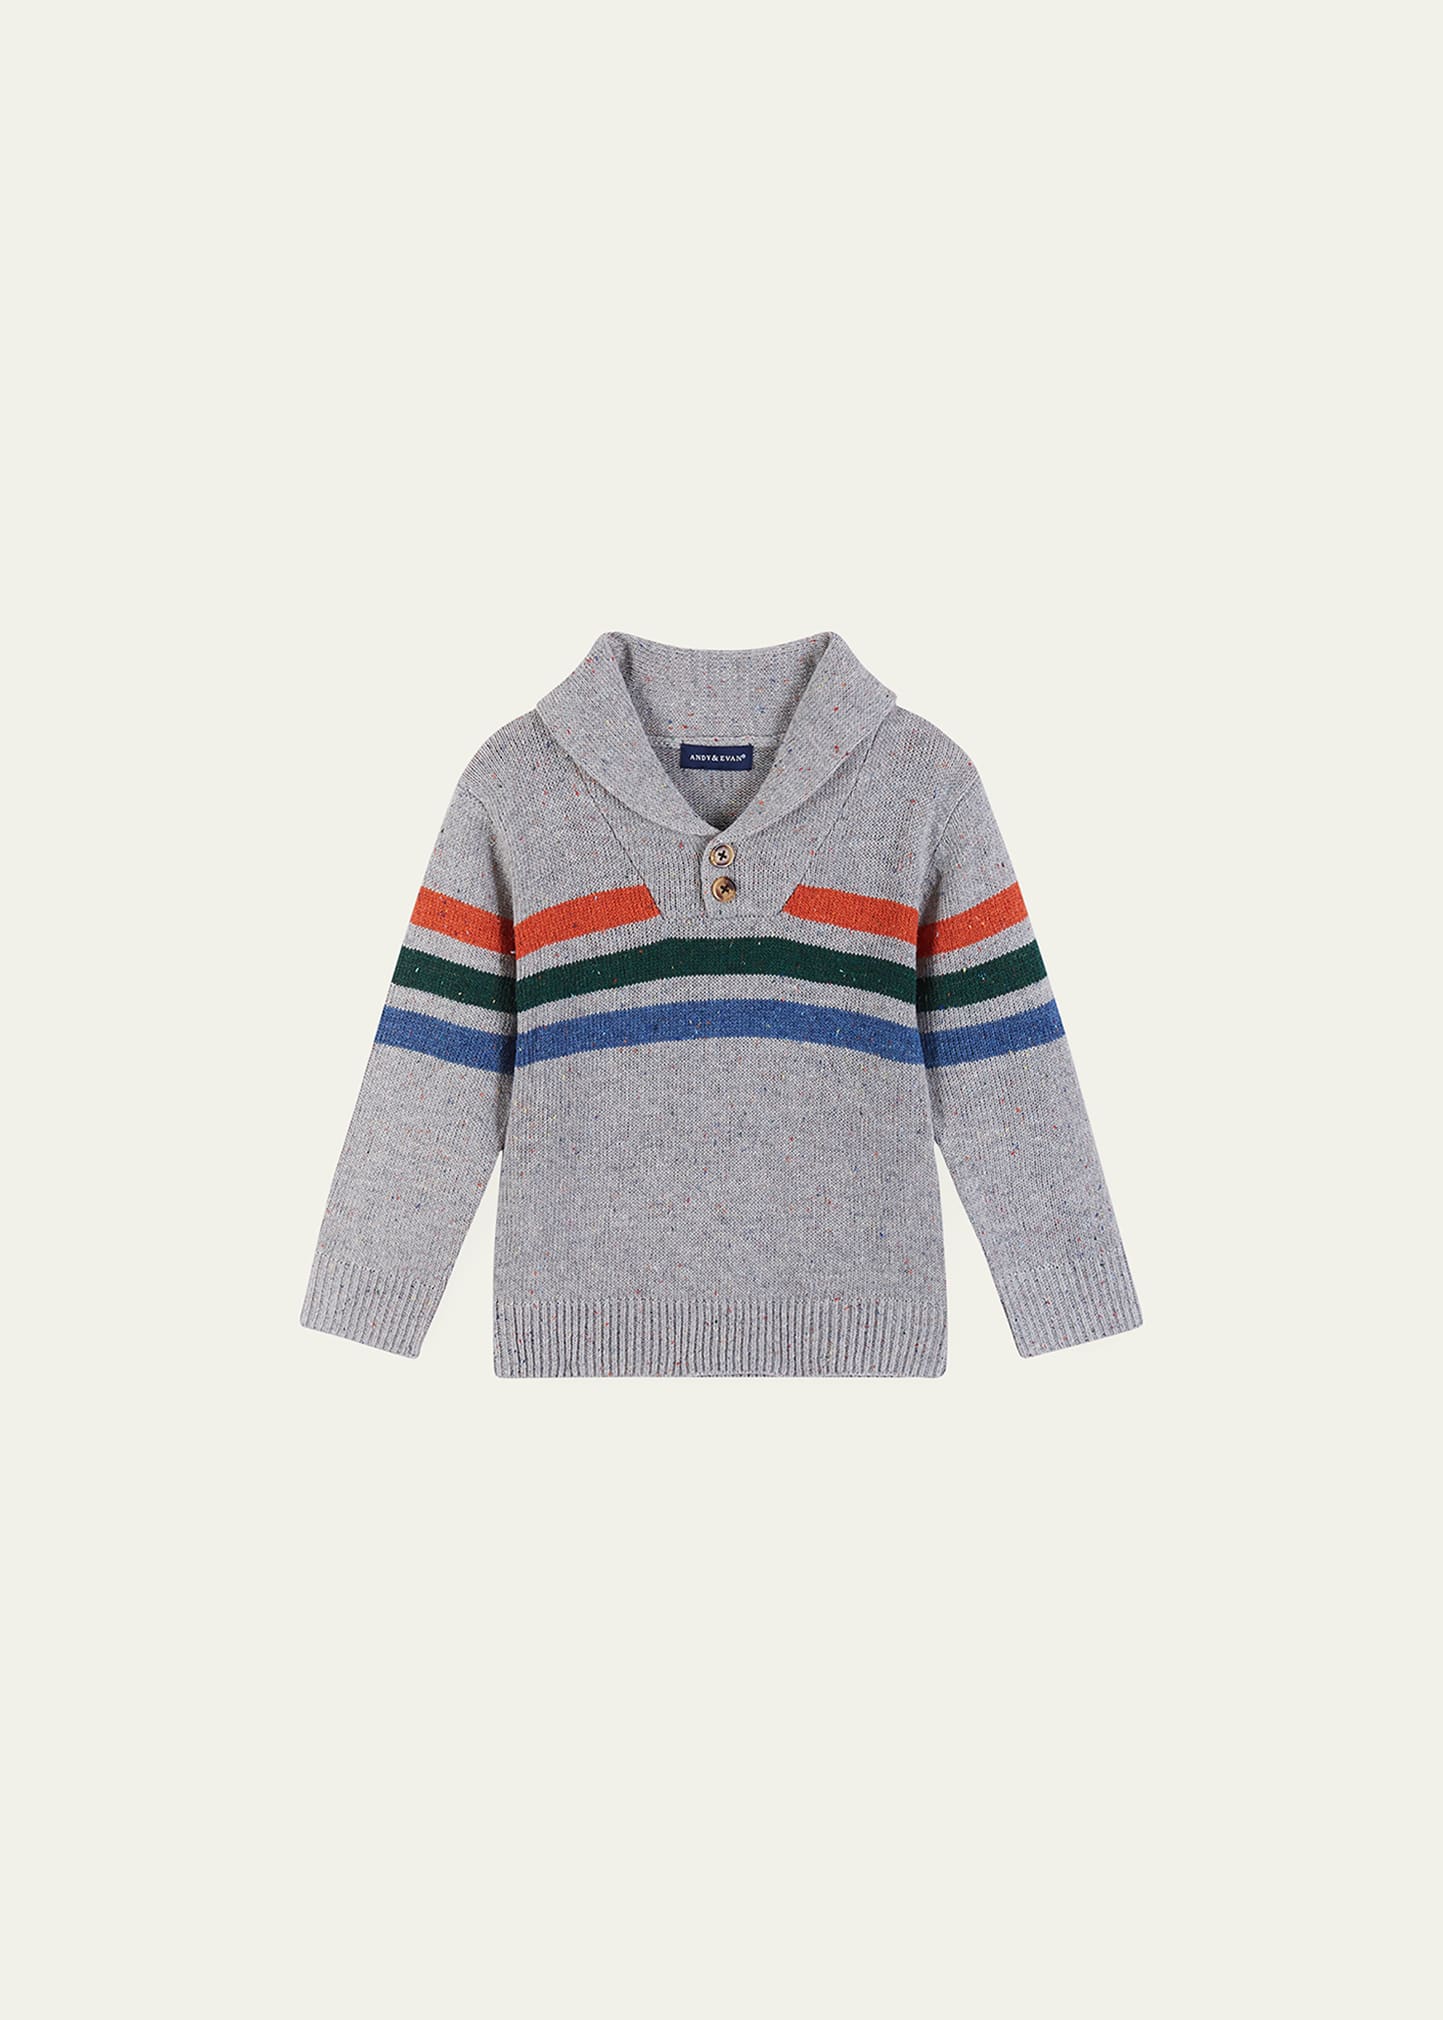 Andy & Evan Boy's Multicolor Stripe Sweater, Size 2-7